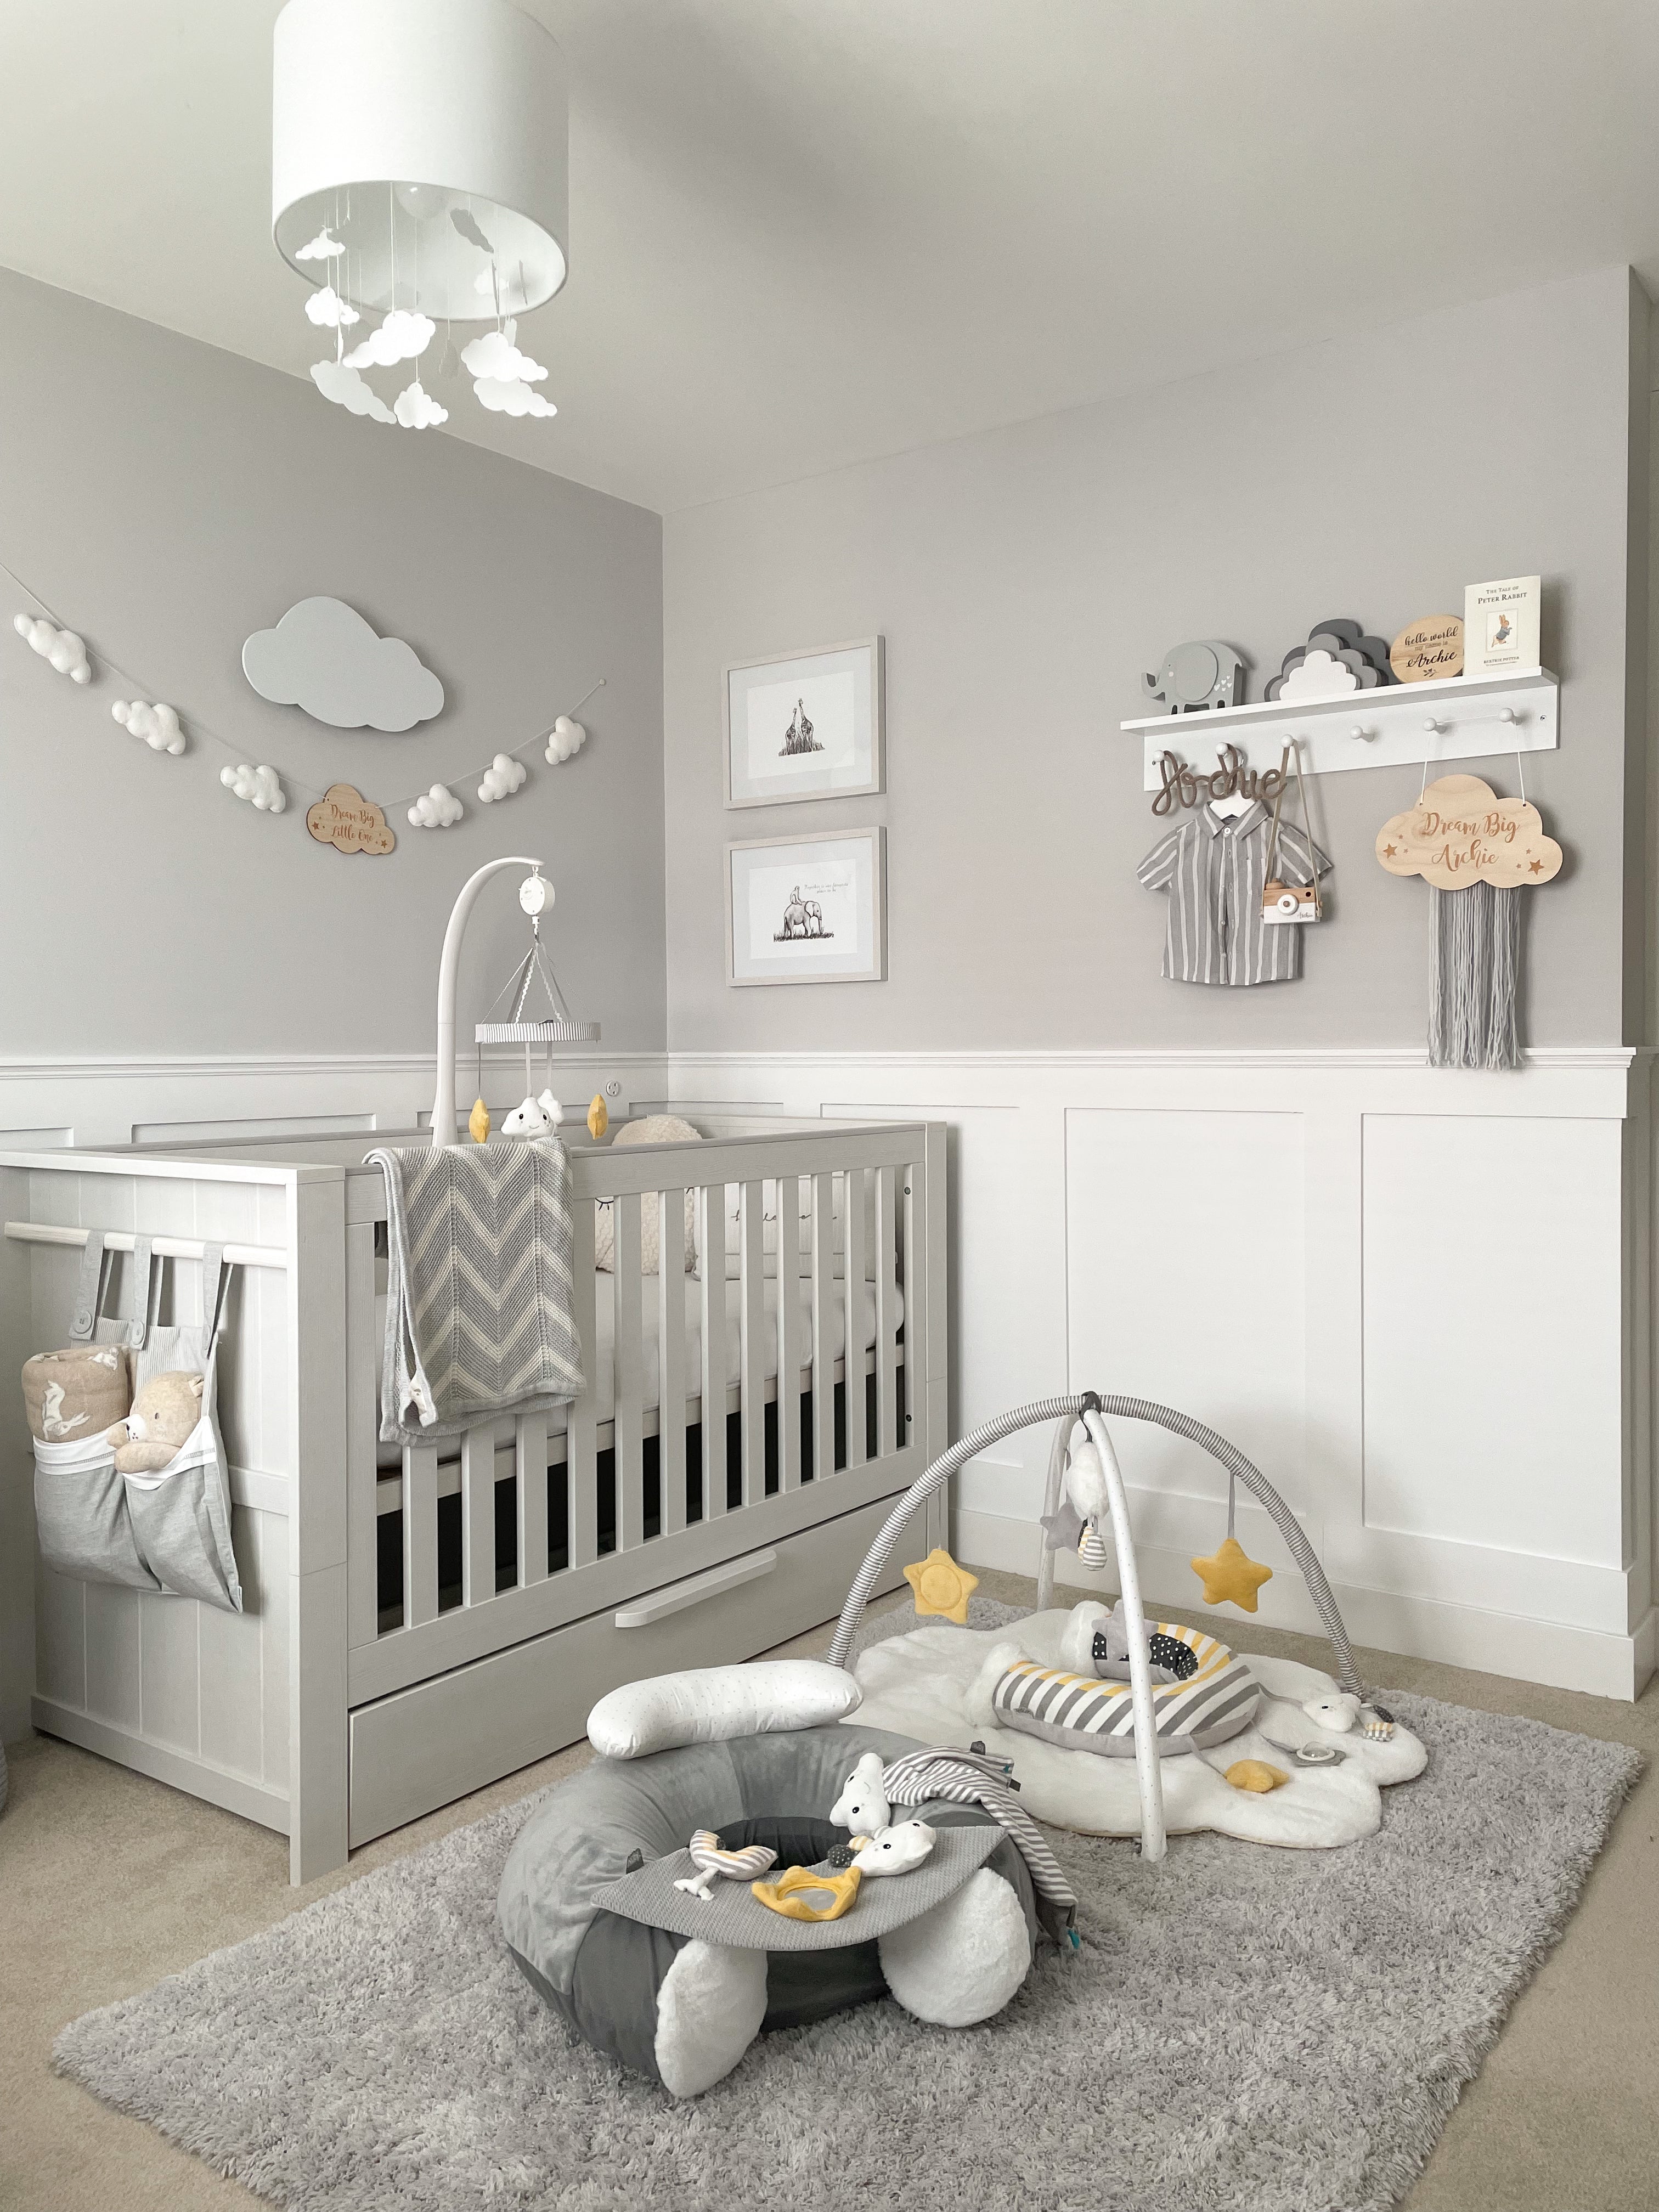 Cute Baby Nursery Ideas From Boho To Glam | baby Bedroom Decor